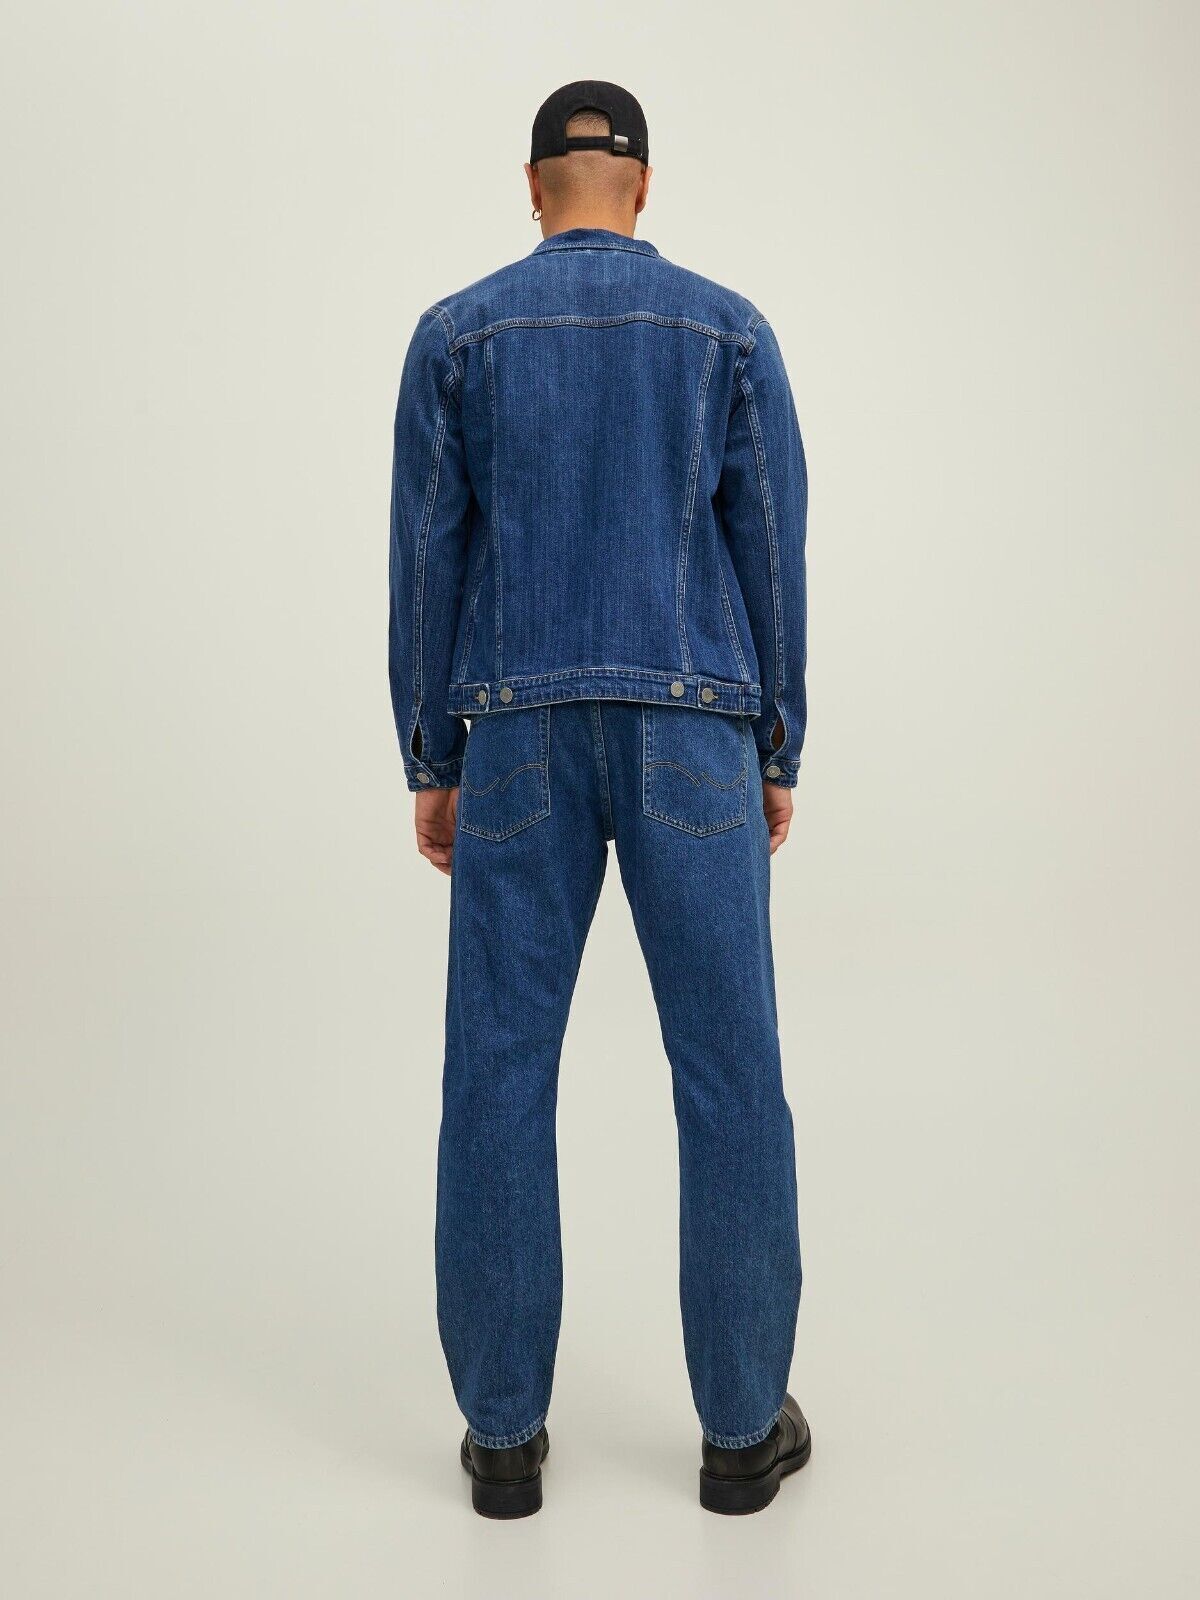 Mens Comfort Jeans Jack Jones Mike Smart Casual Black Blue Denim Trousers W28-38